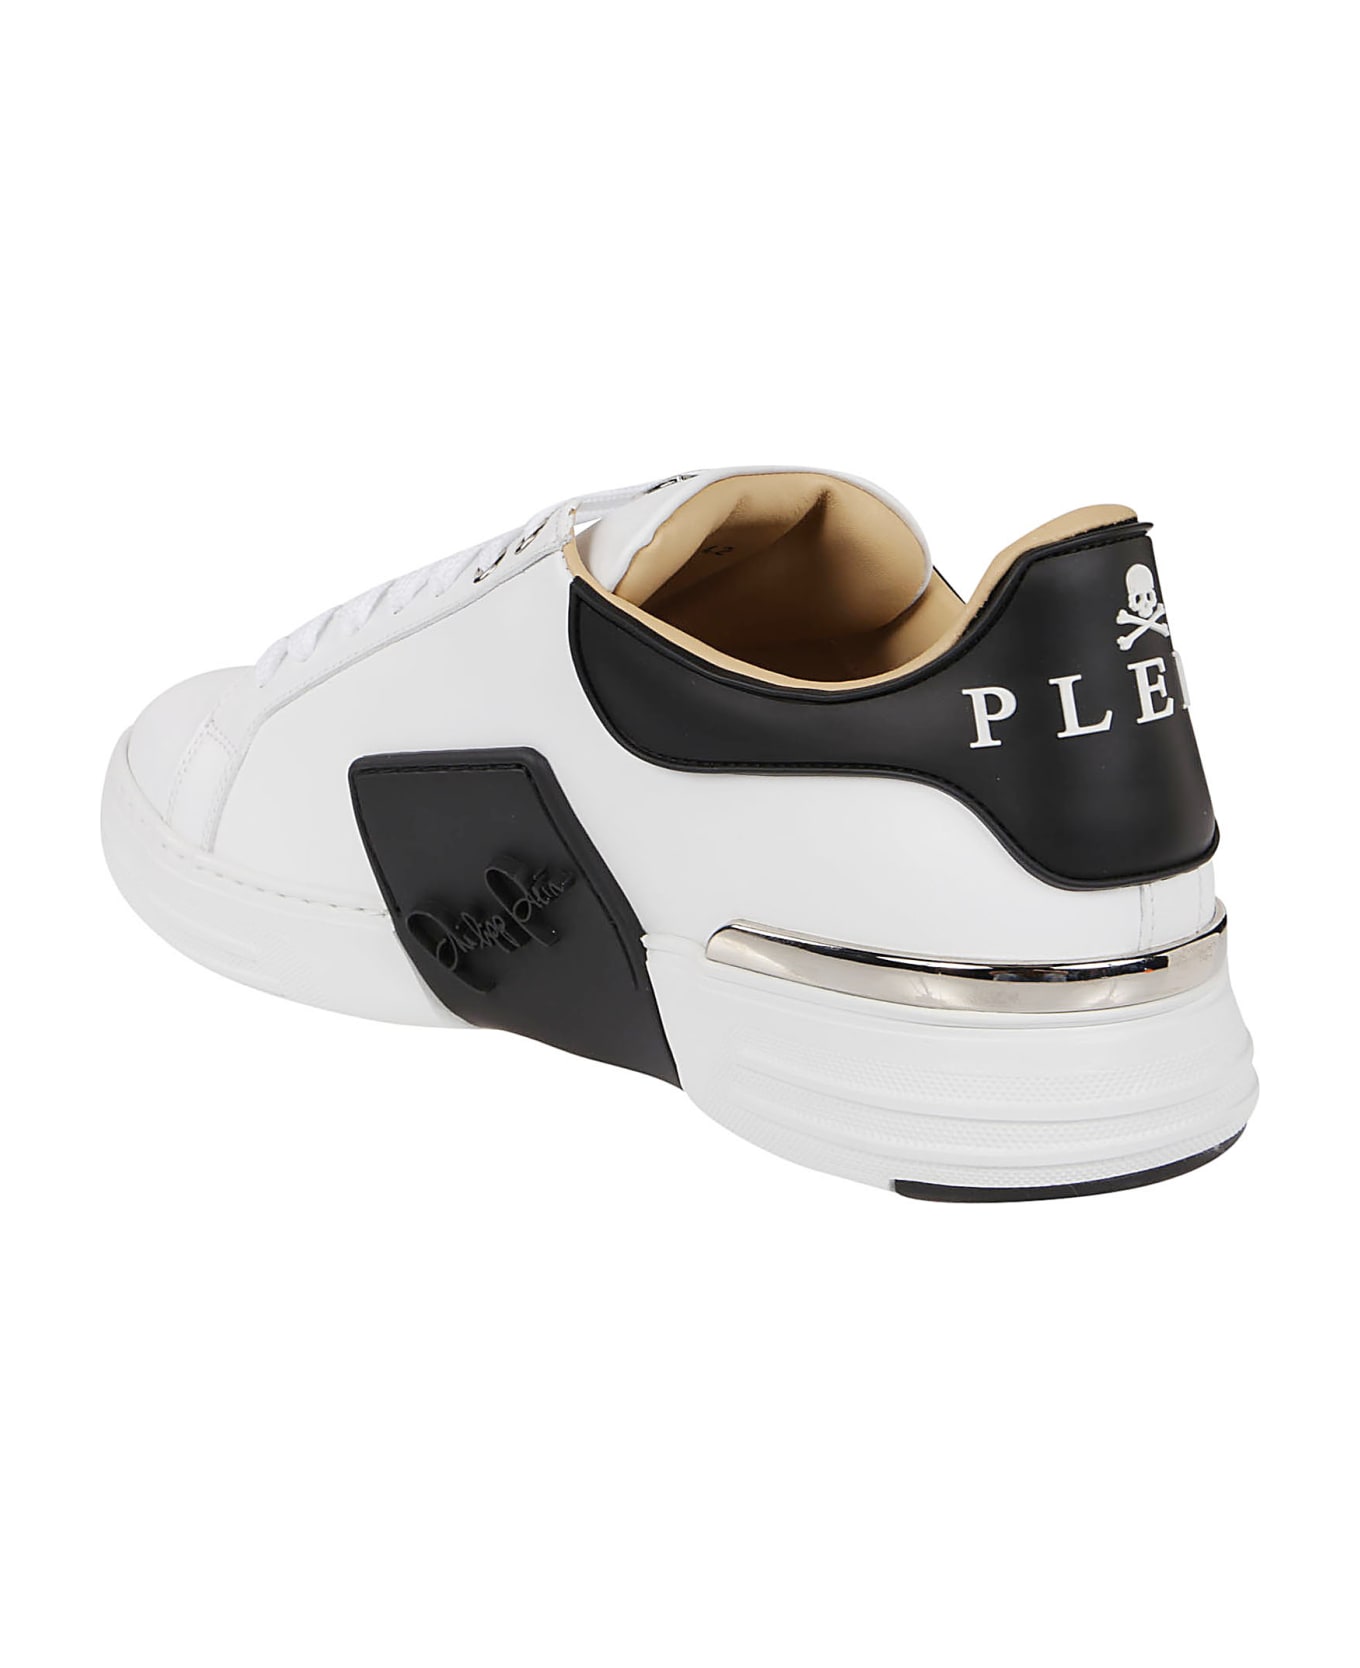 Philipp Plein Hexagon Low Top Sneakers - White スニーカー